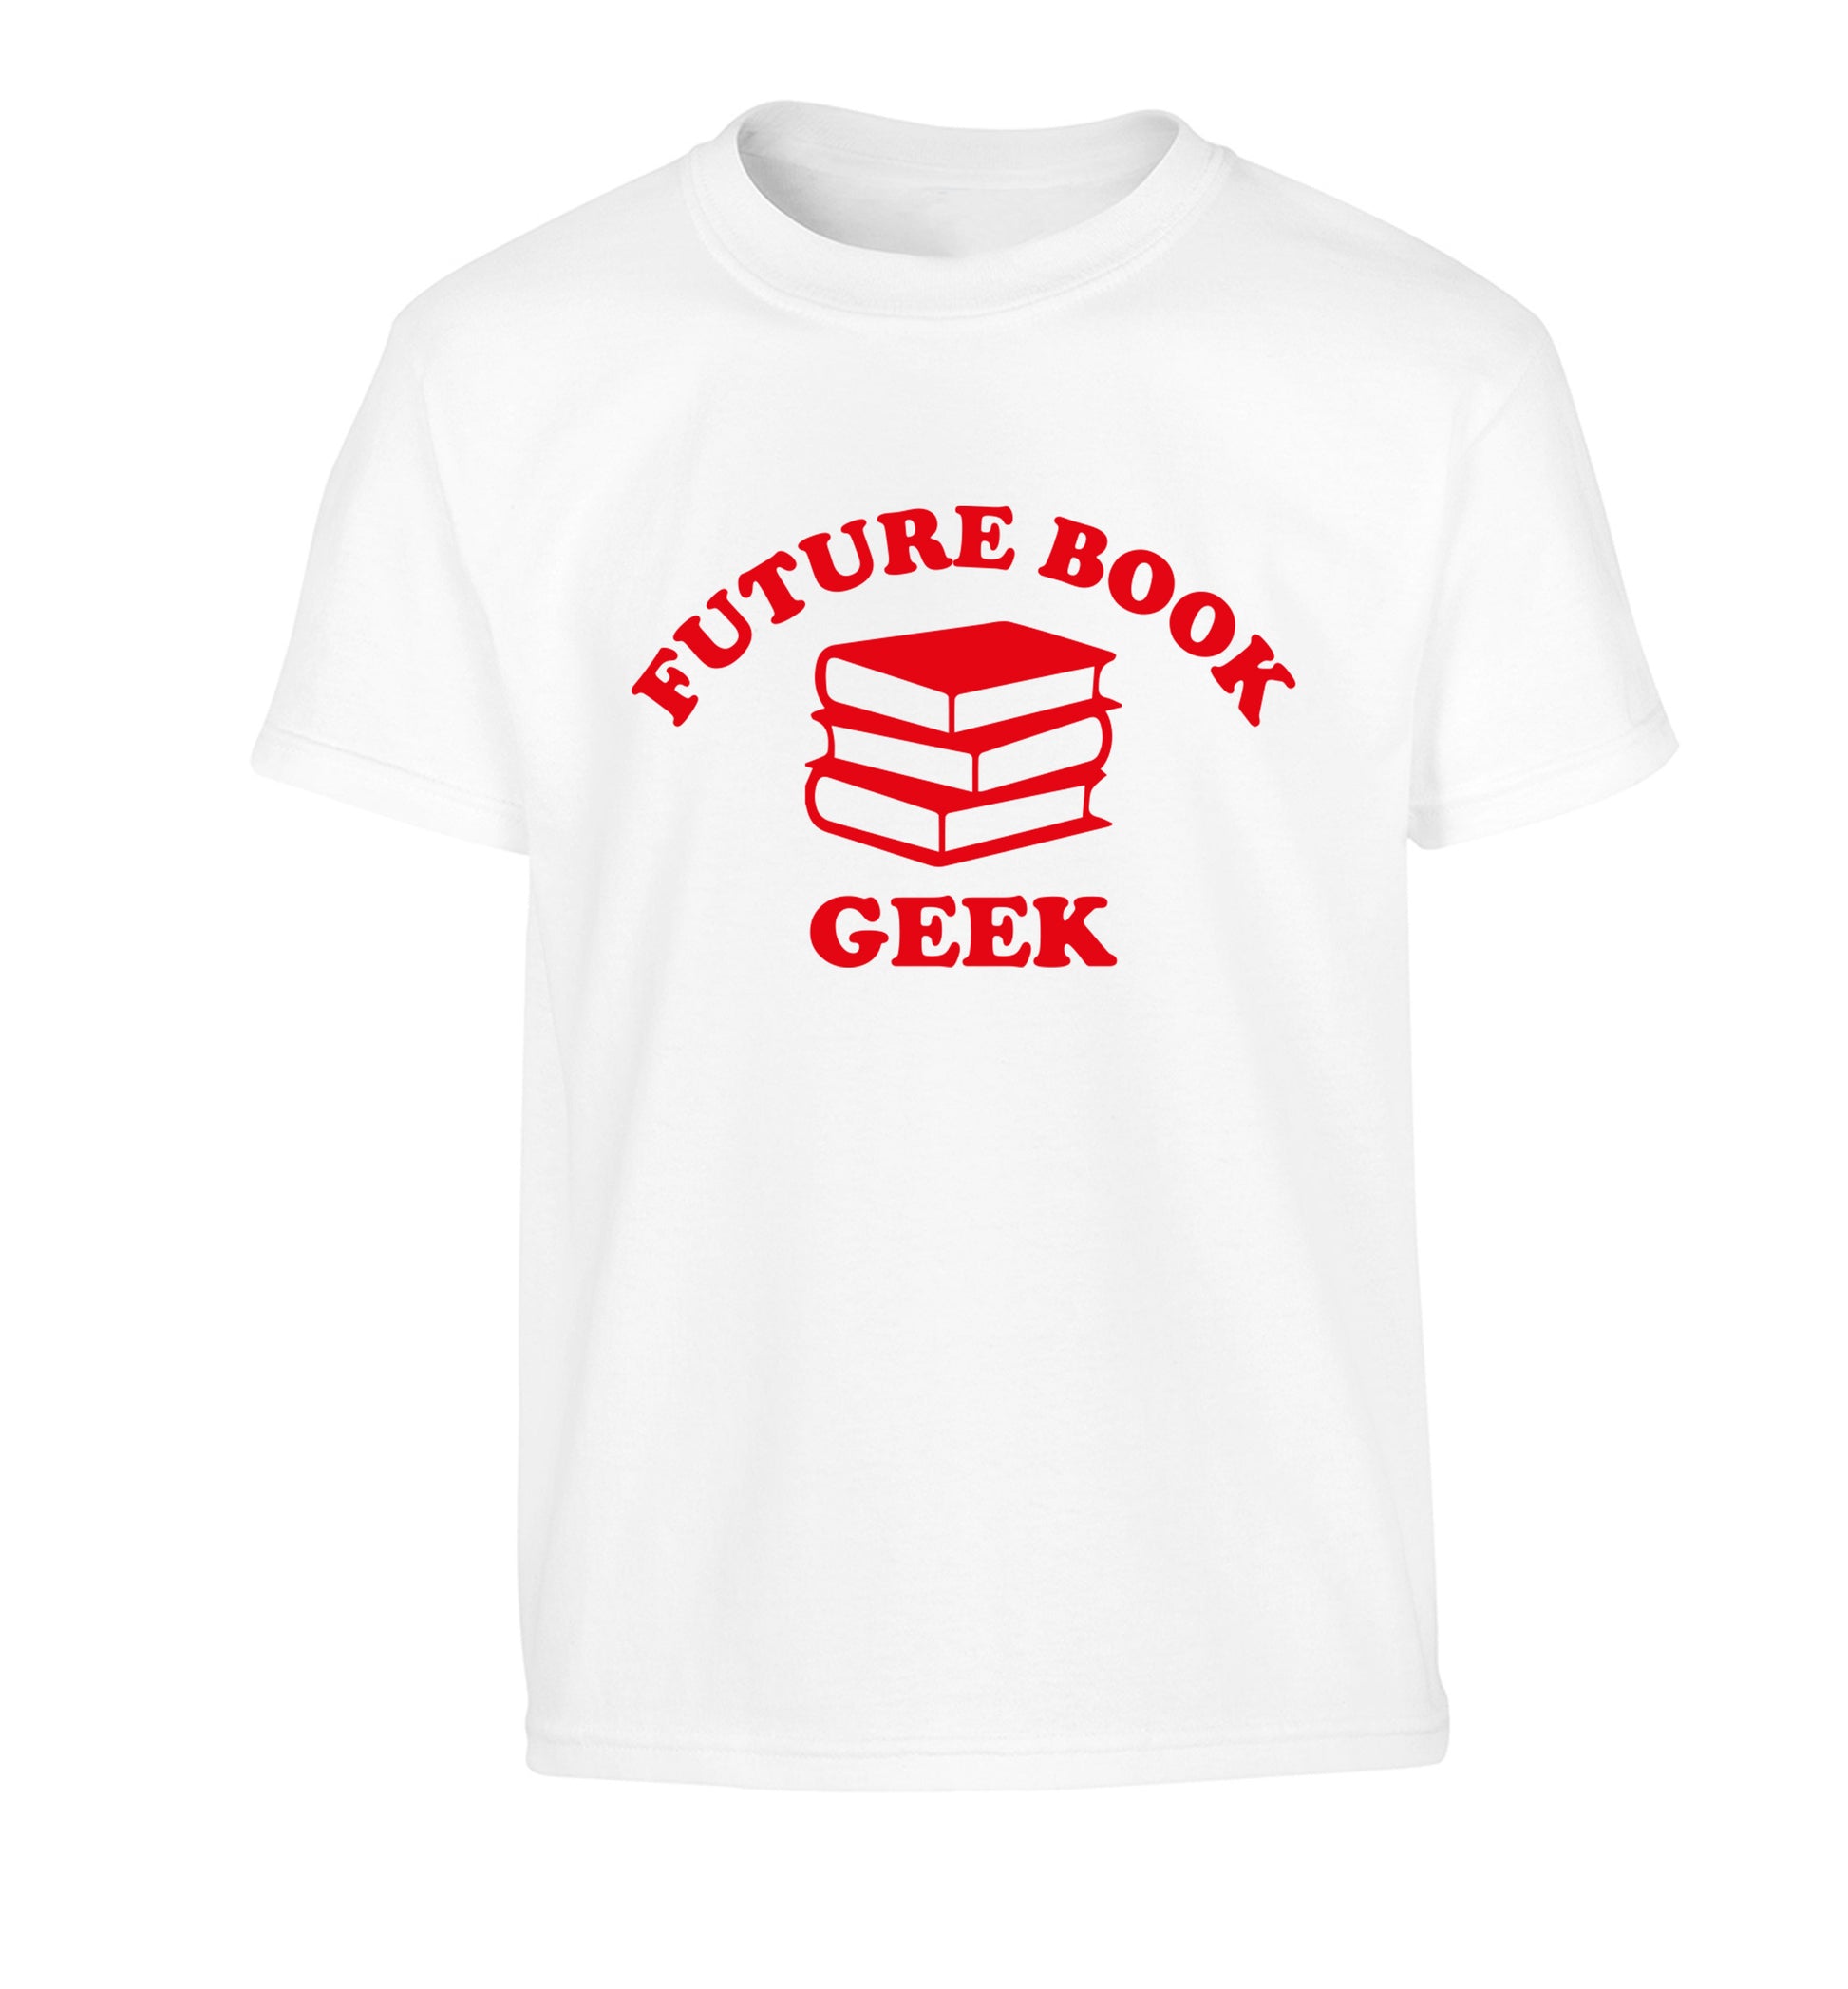 Future book geek Children's white Tshirt 12-14 Years